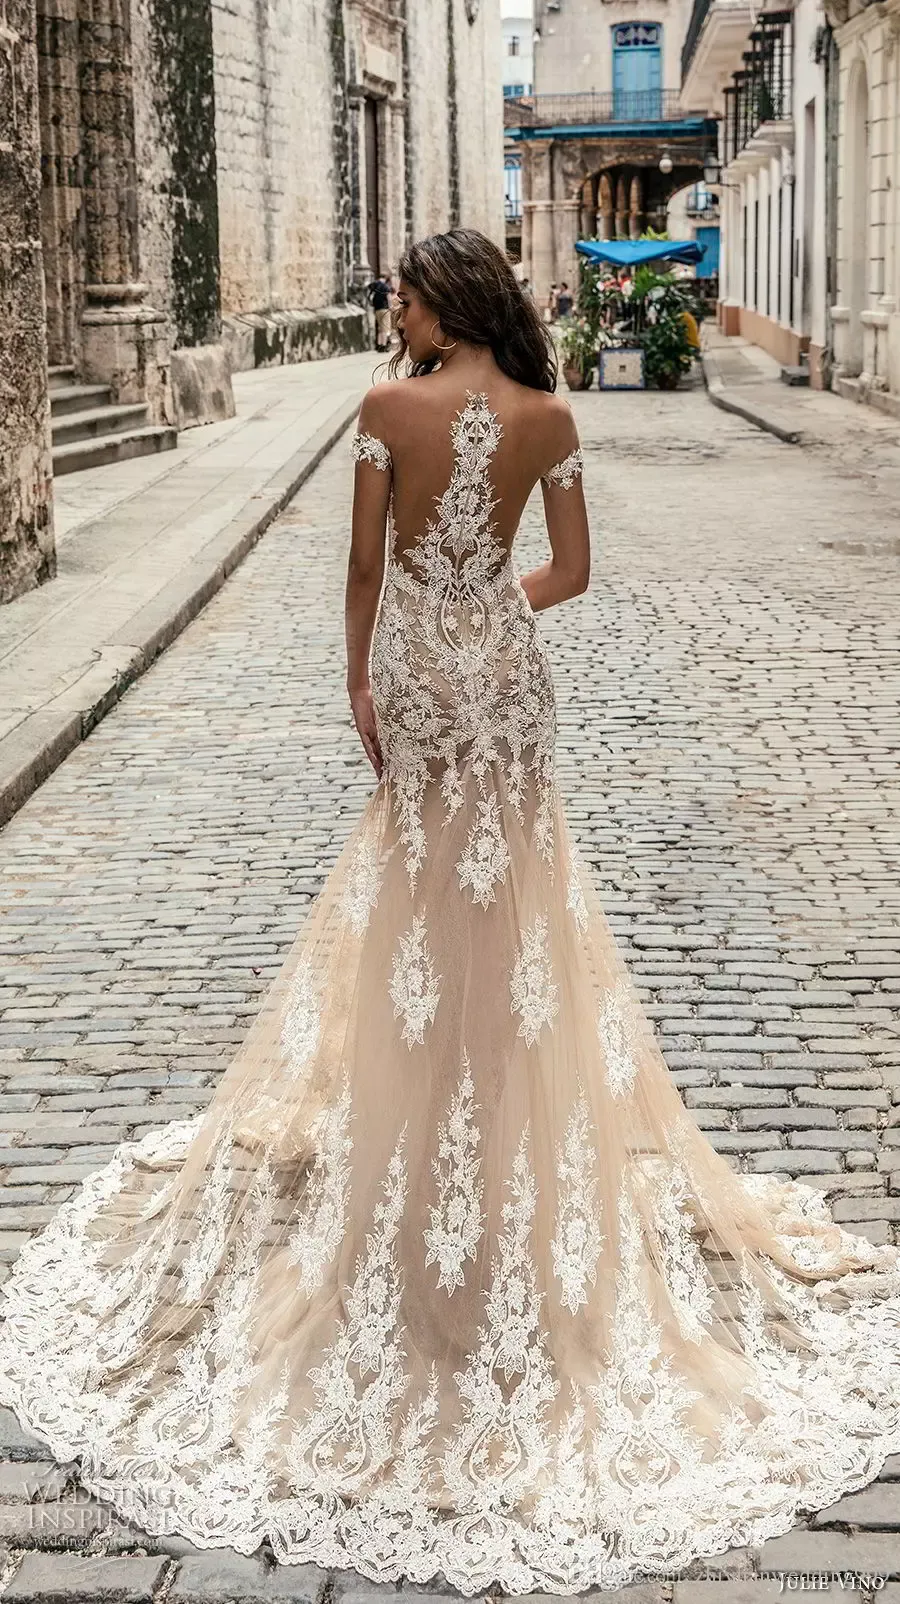 Champagne Julie Vino Wedding Dresses 2020 Off Shoulder Deep Plunging Neckline Bridal Gowns Sweep Train Lace Wedding Dress Custom Made